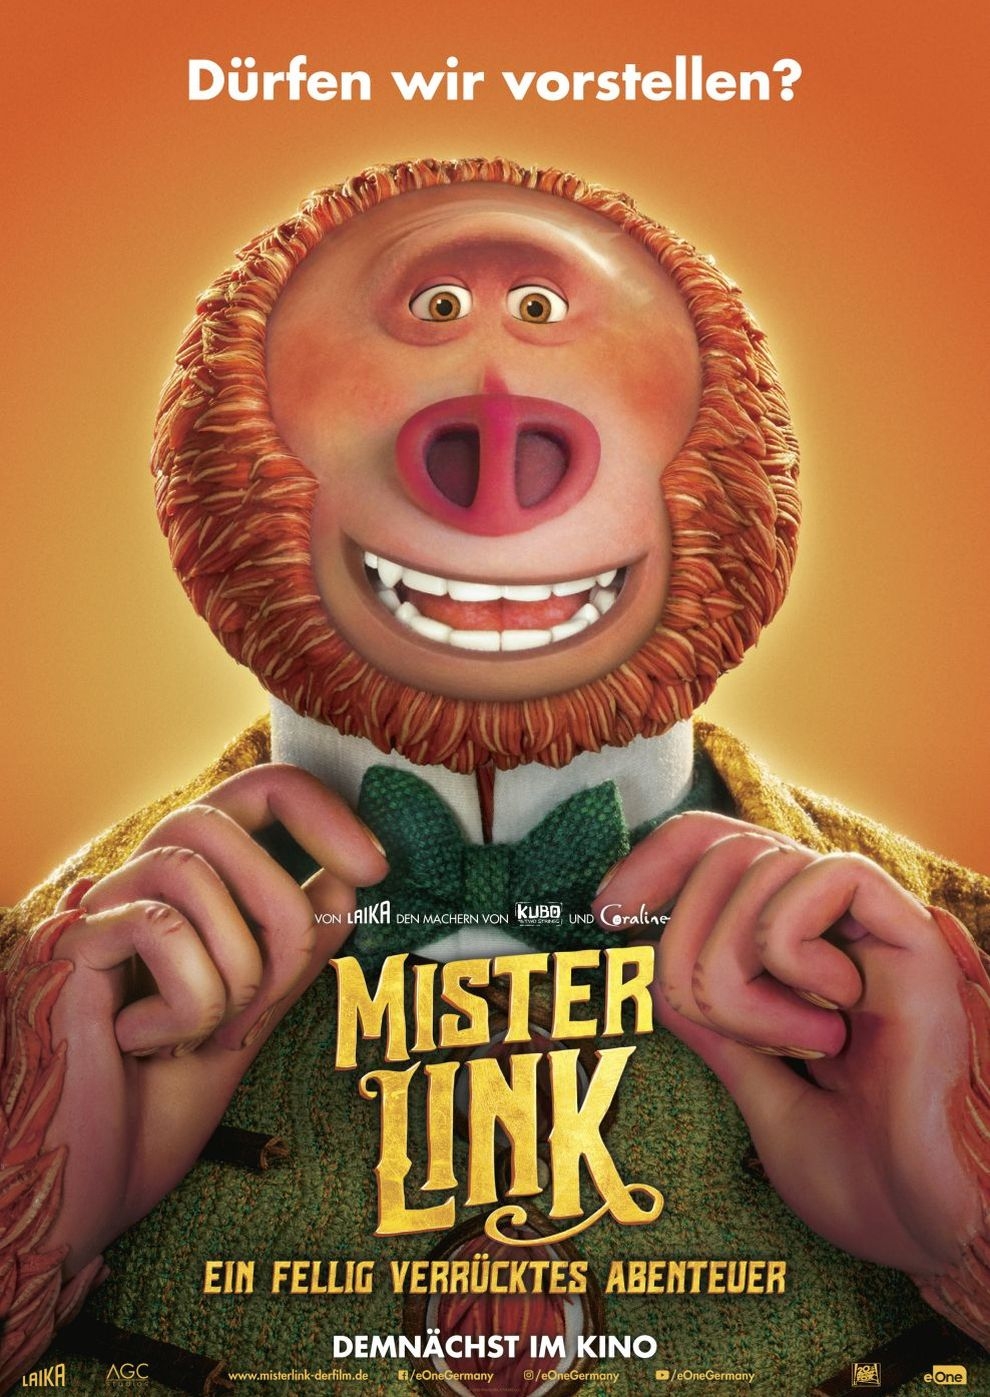 Mister Link - Ein fellig verrücktes Abenteuer (Poster)